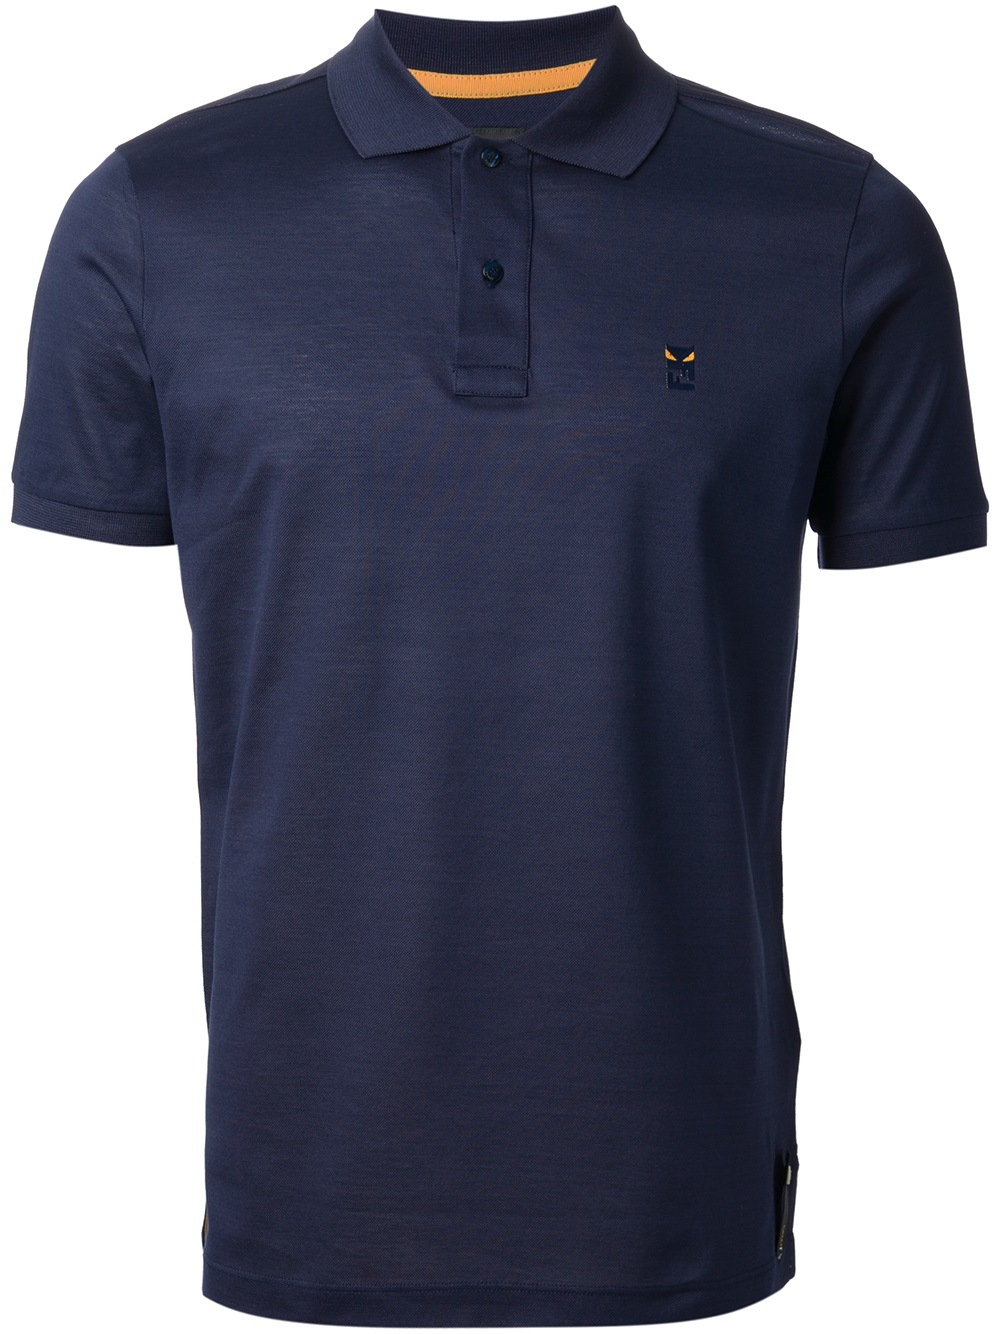 Lyst - Fendi Classic Polo Shirt in Blue for Men